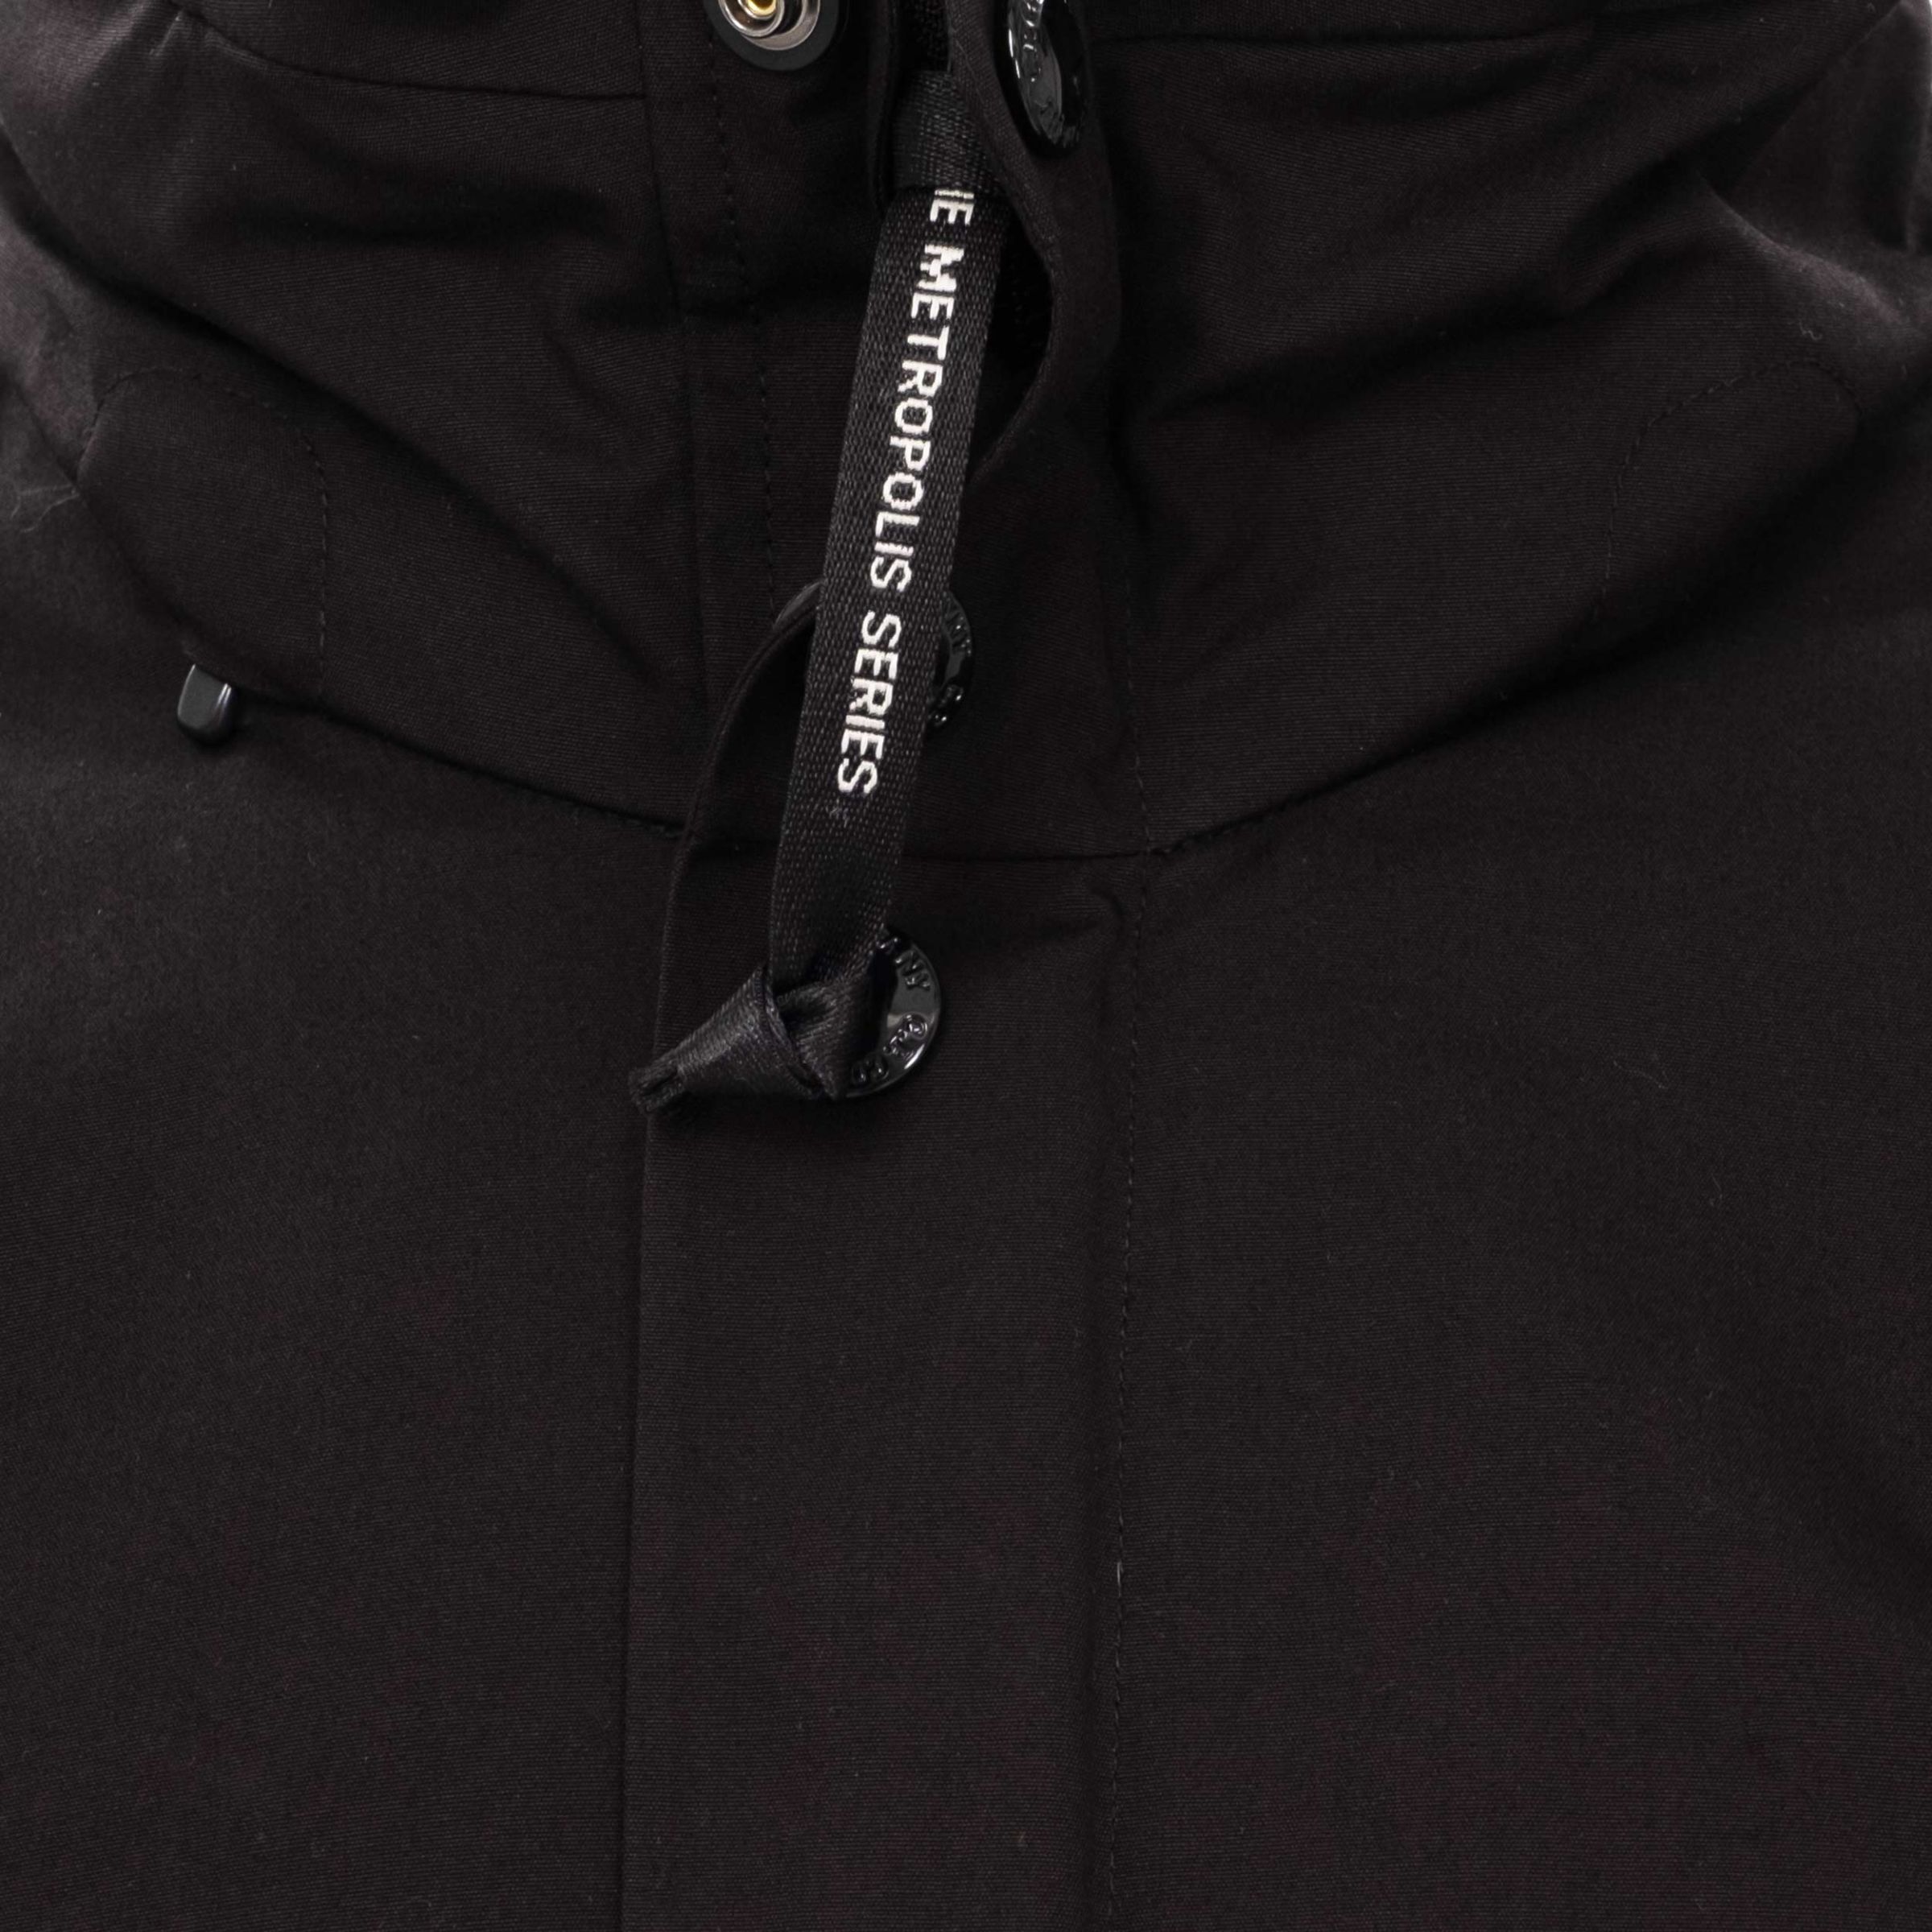 Куртка C.P. Company METROPOLIS черная